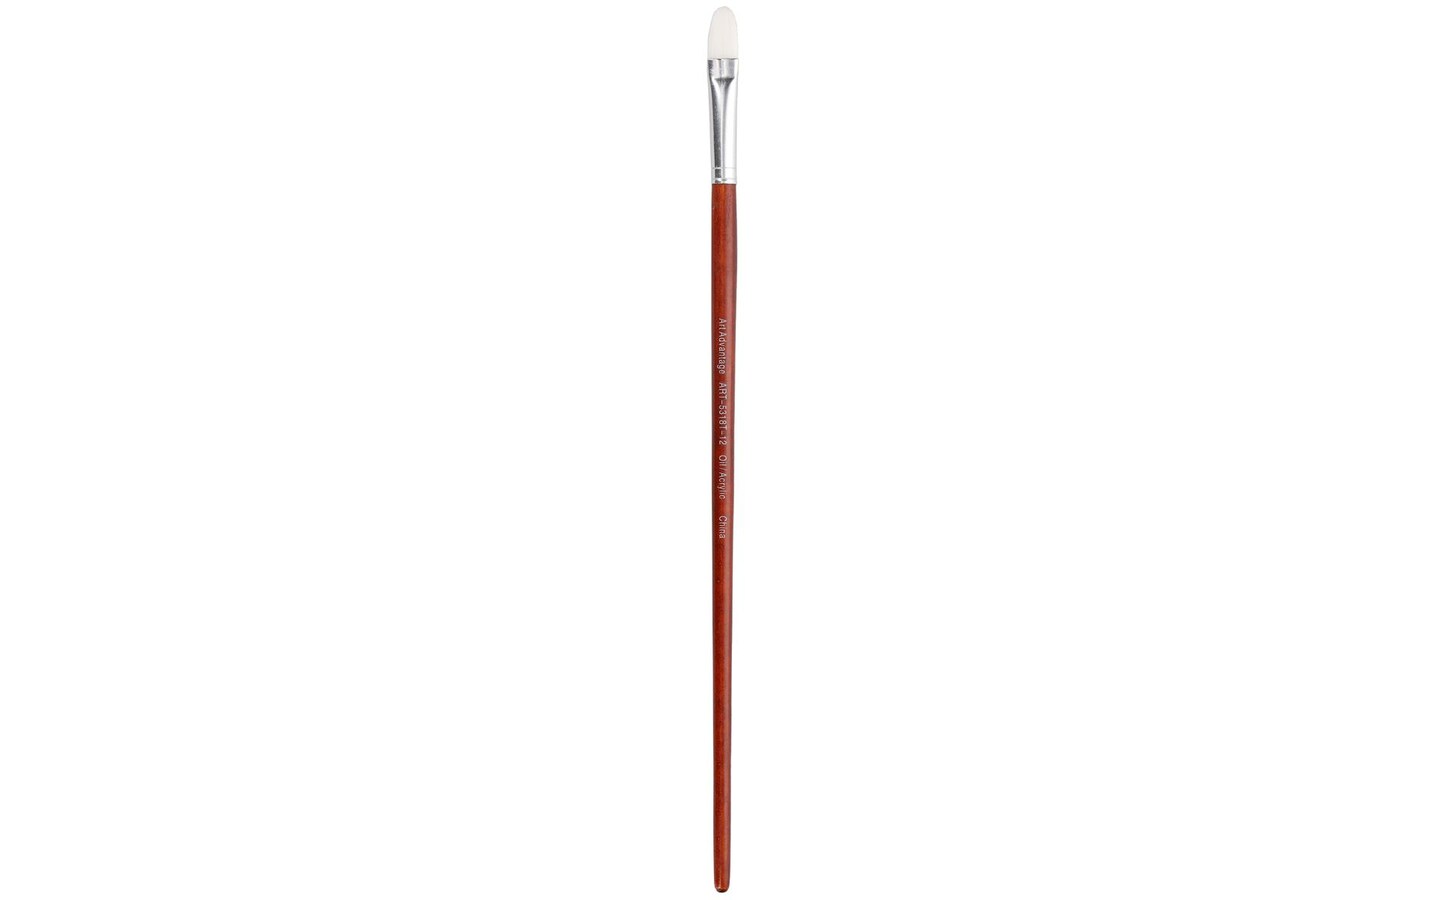 Art Advantage White Nylon Bristle Long Handle Filbert #12 Paint Brush with Wood Handle - paint brushes for Acrylic Paint , Oil or Watercolor Paint - Face Paint application, Nail Art